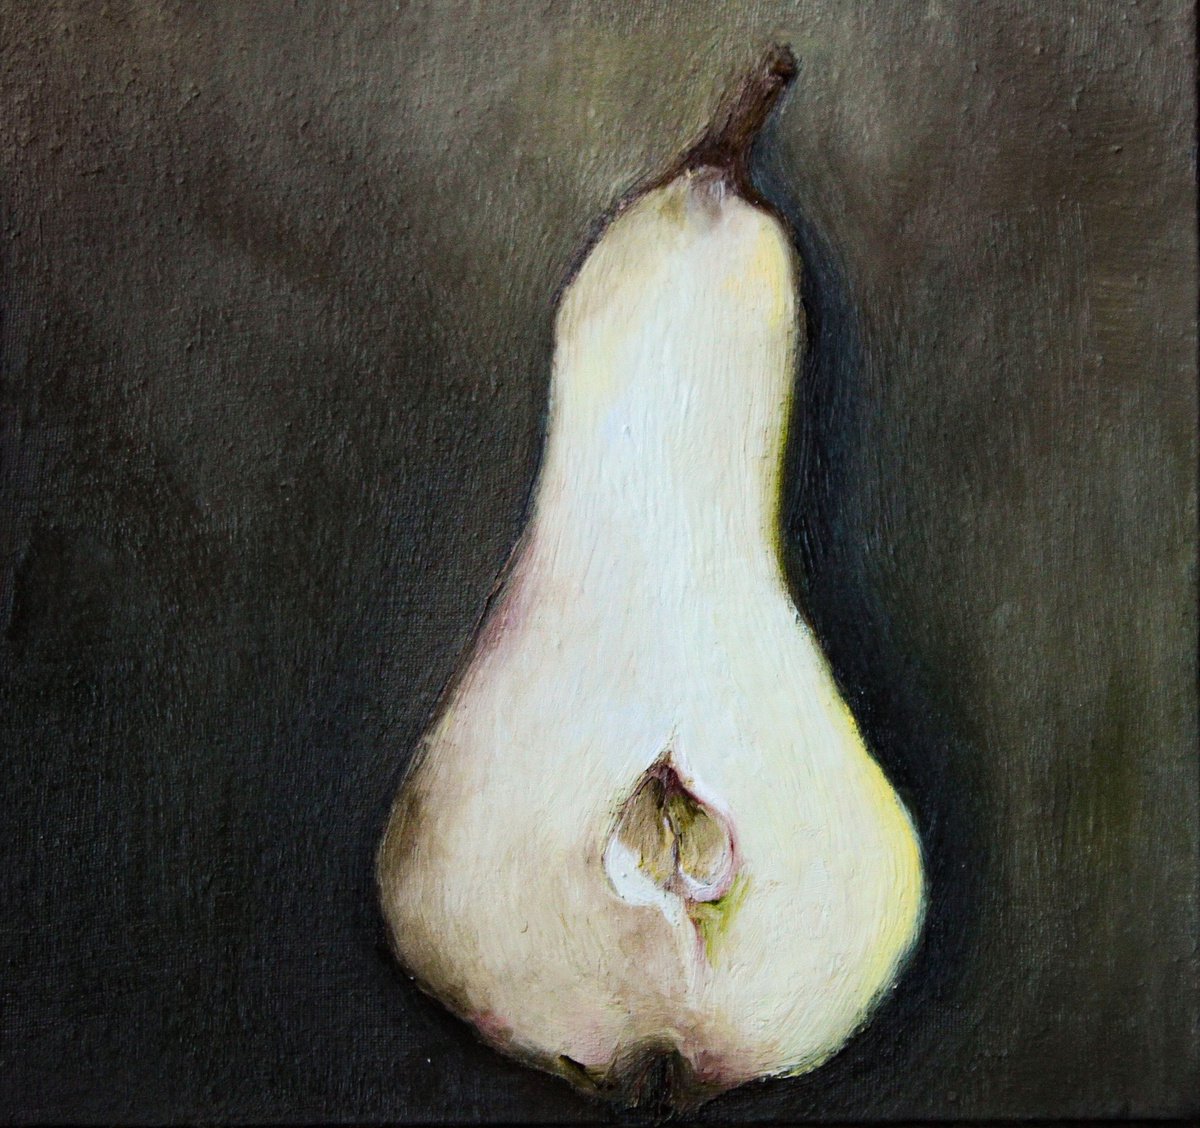 A curious study of pear by Ranga J